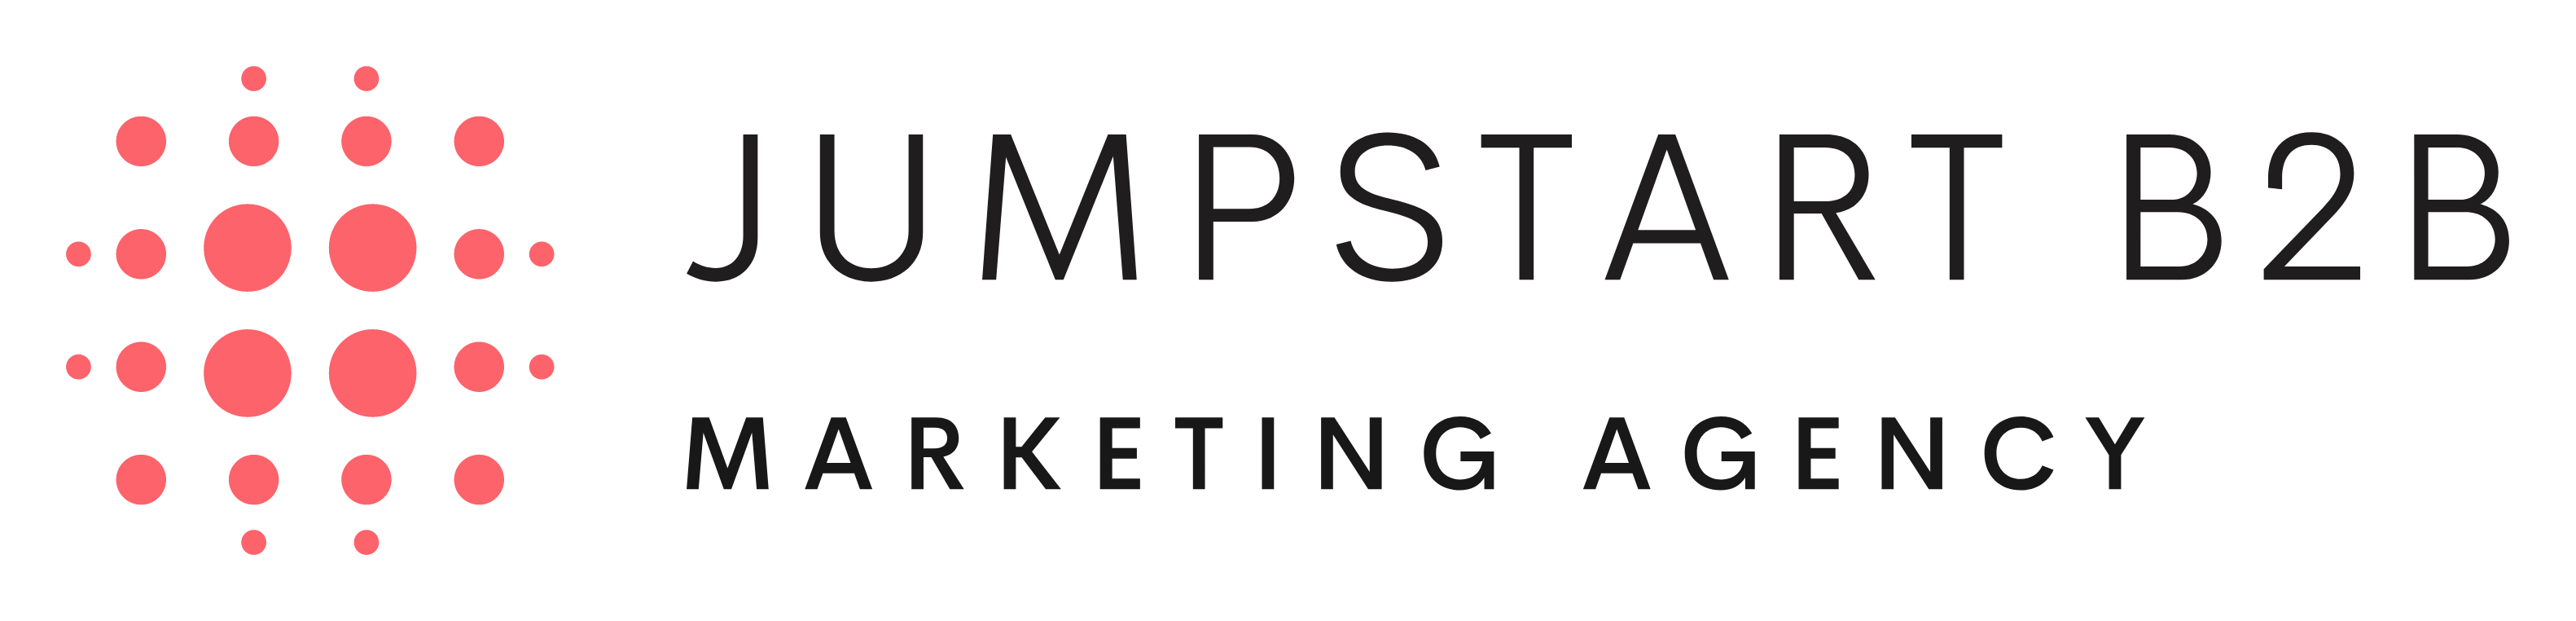 Jumpstart B2B Marketing Agency